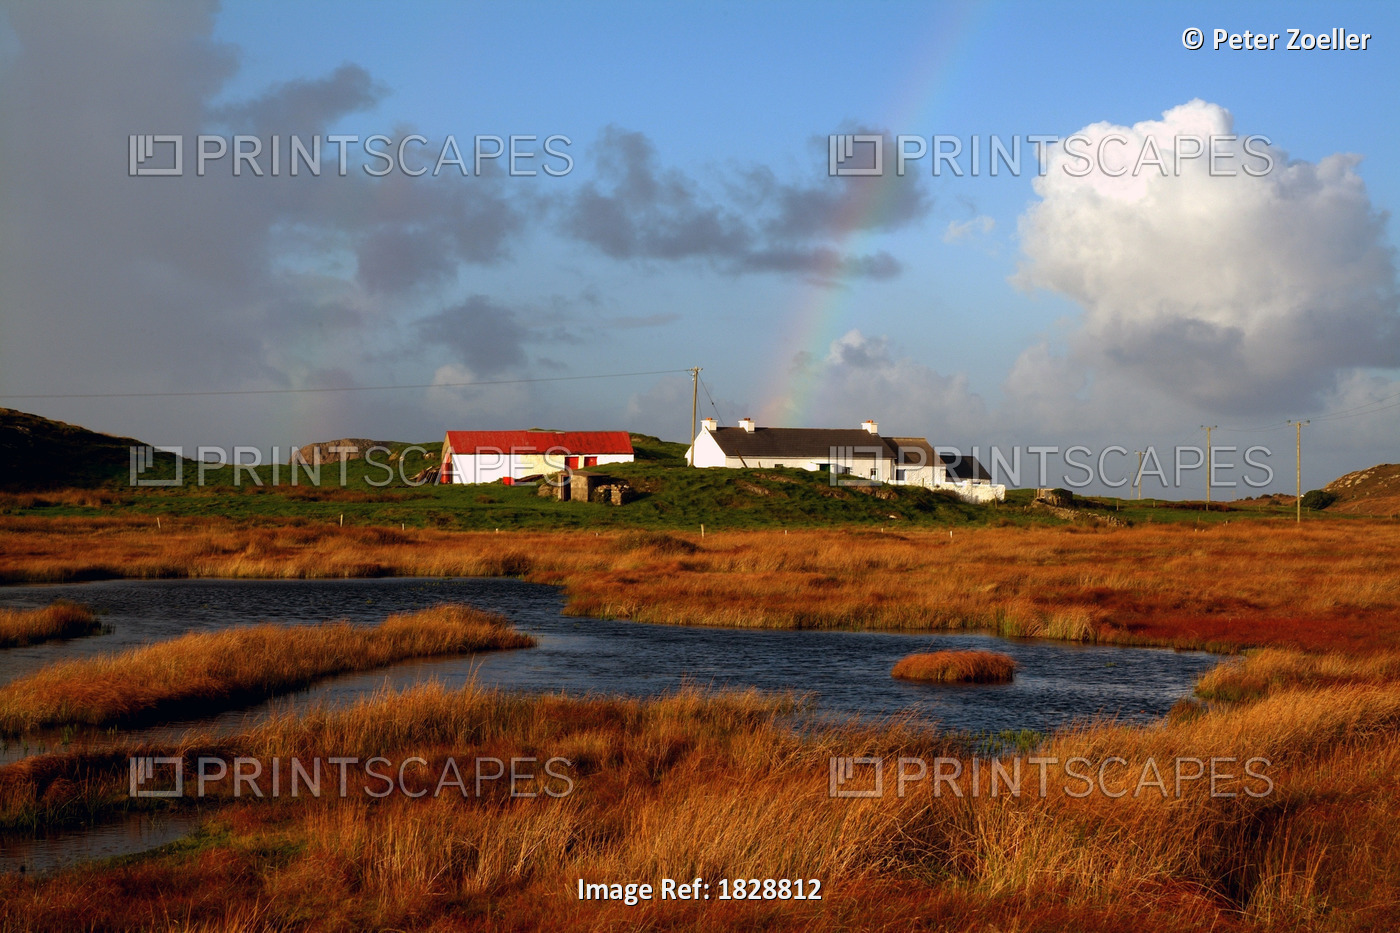 Malin Head, County Donegal, Ireland; Farmland